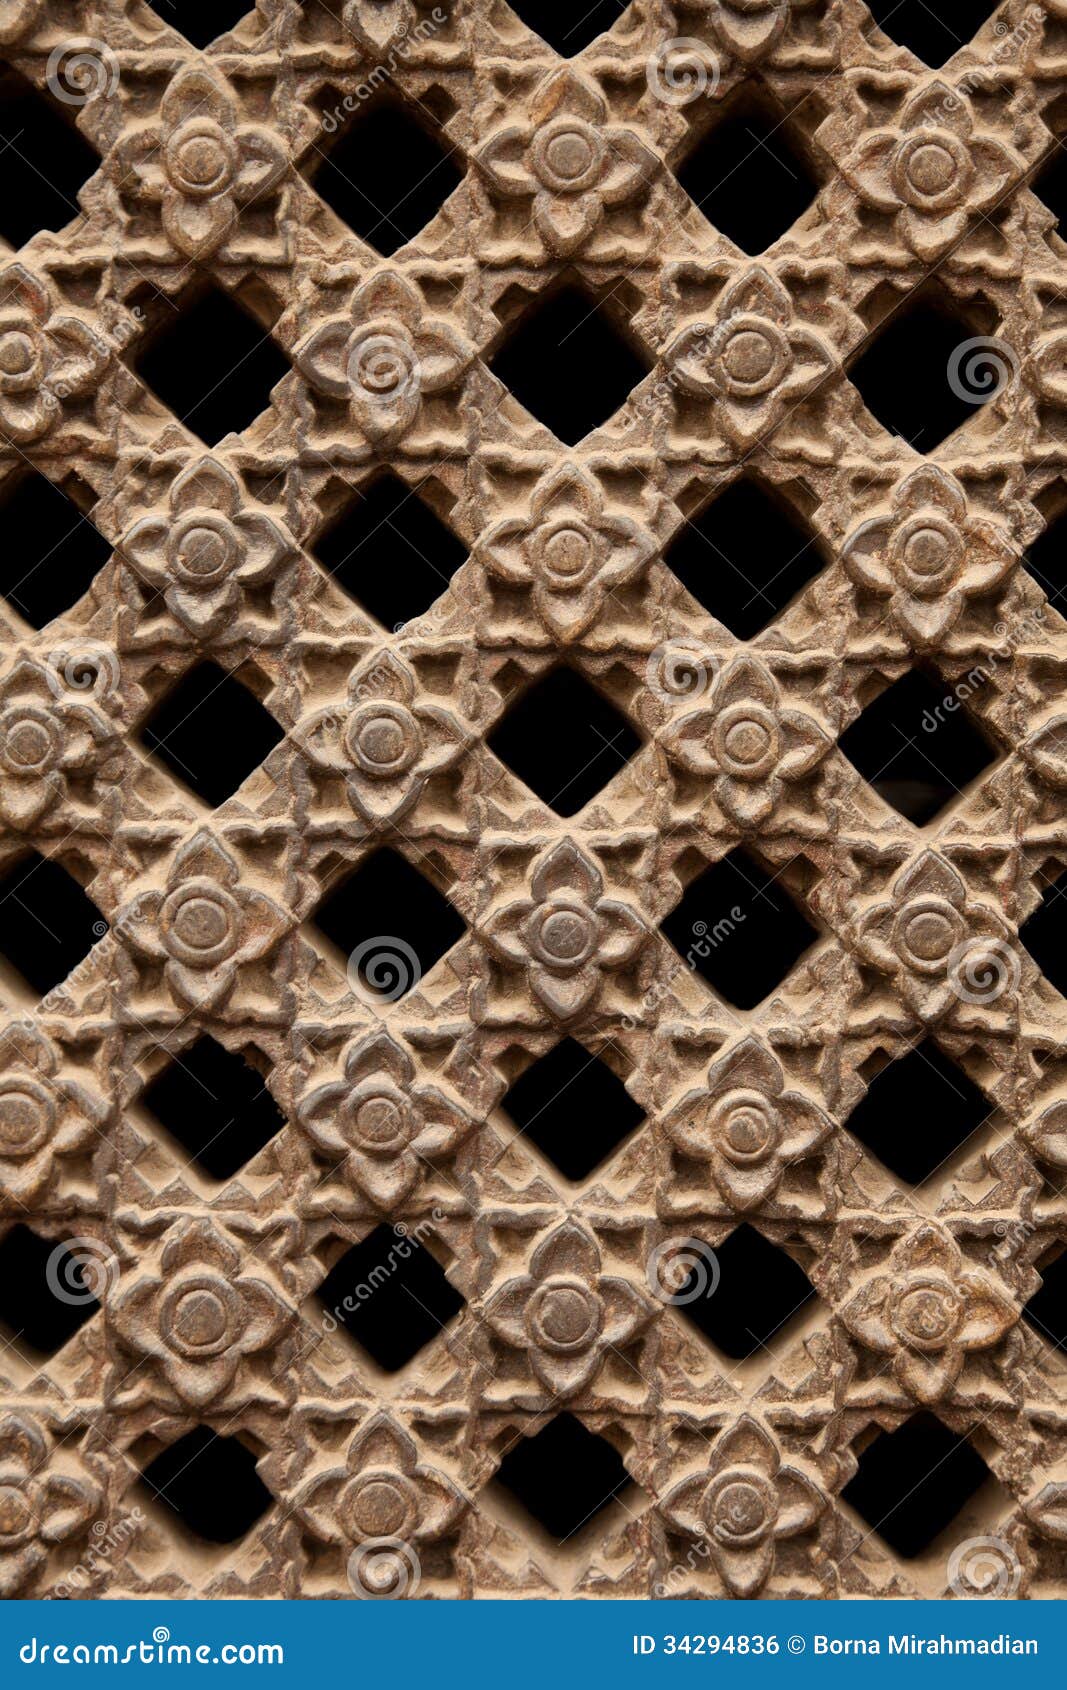 stone latticework with flowers pattern